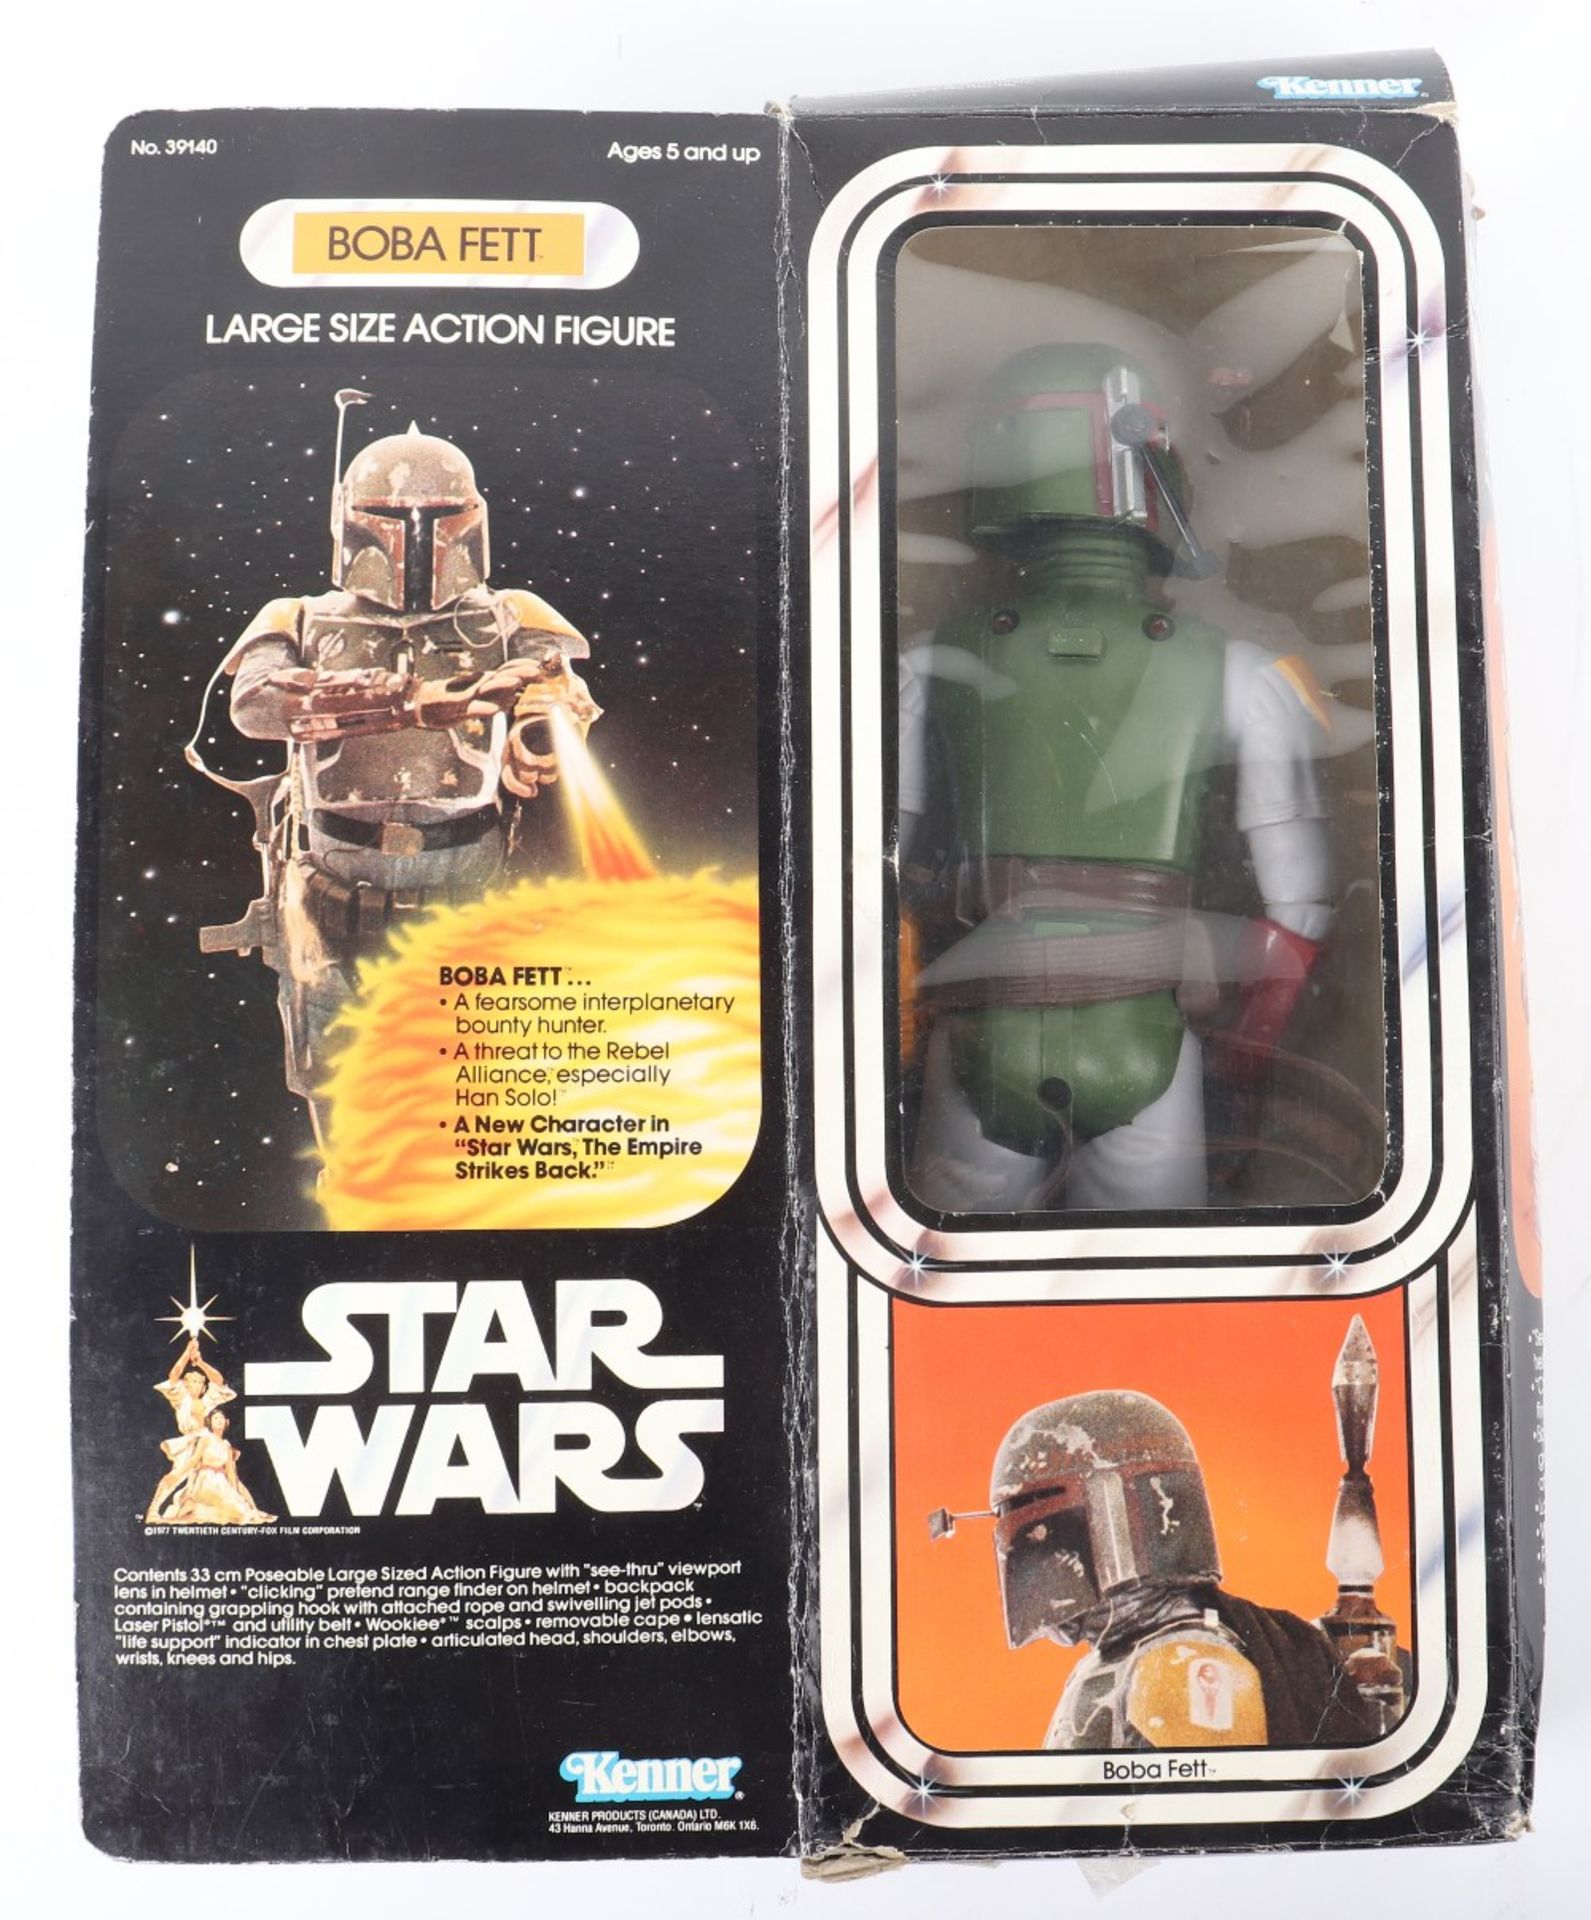 Vintage Kenner Star Wars 12in boba fett figure boxed - Image 2 of 4